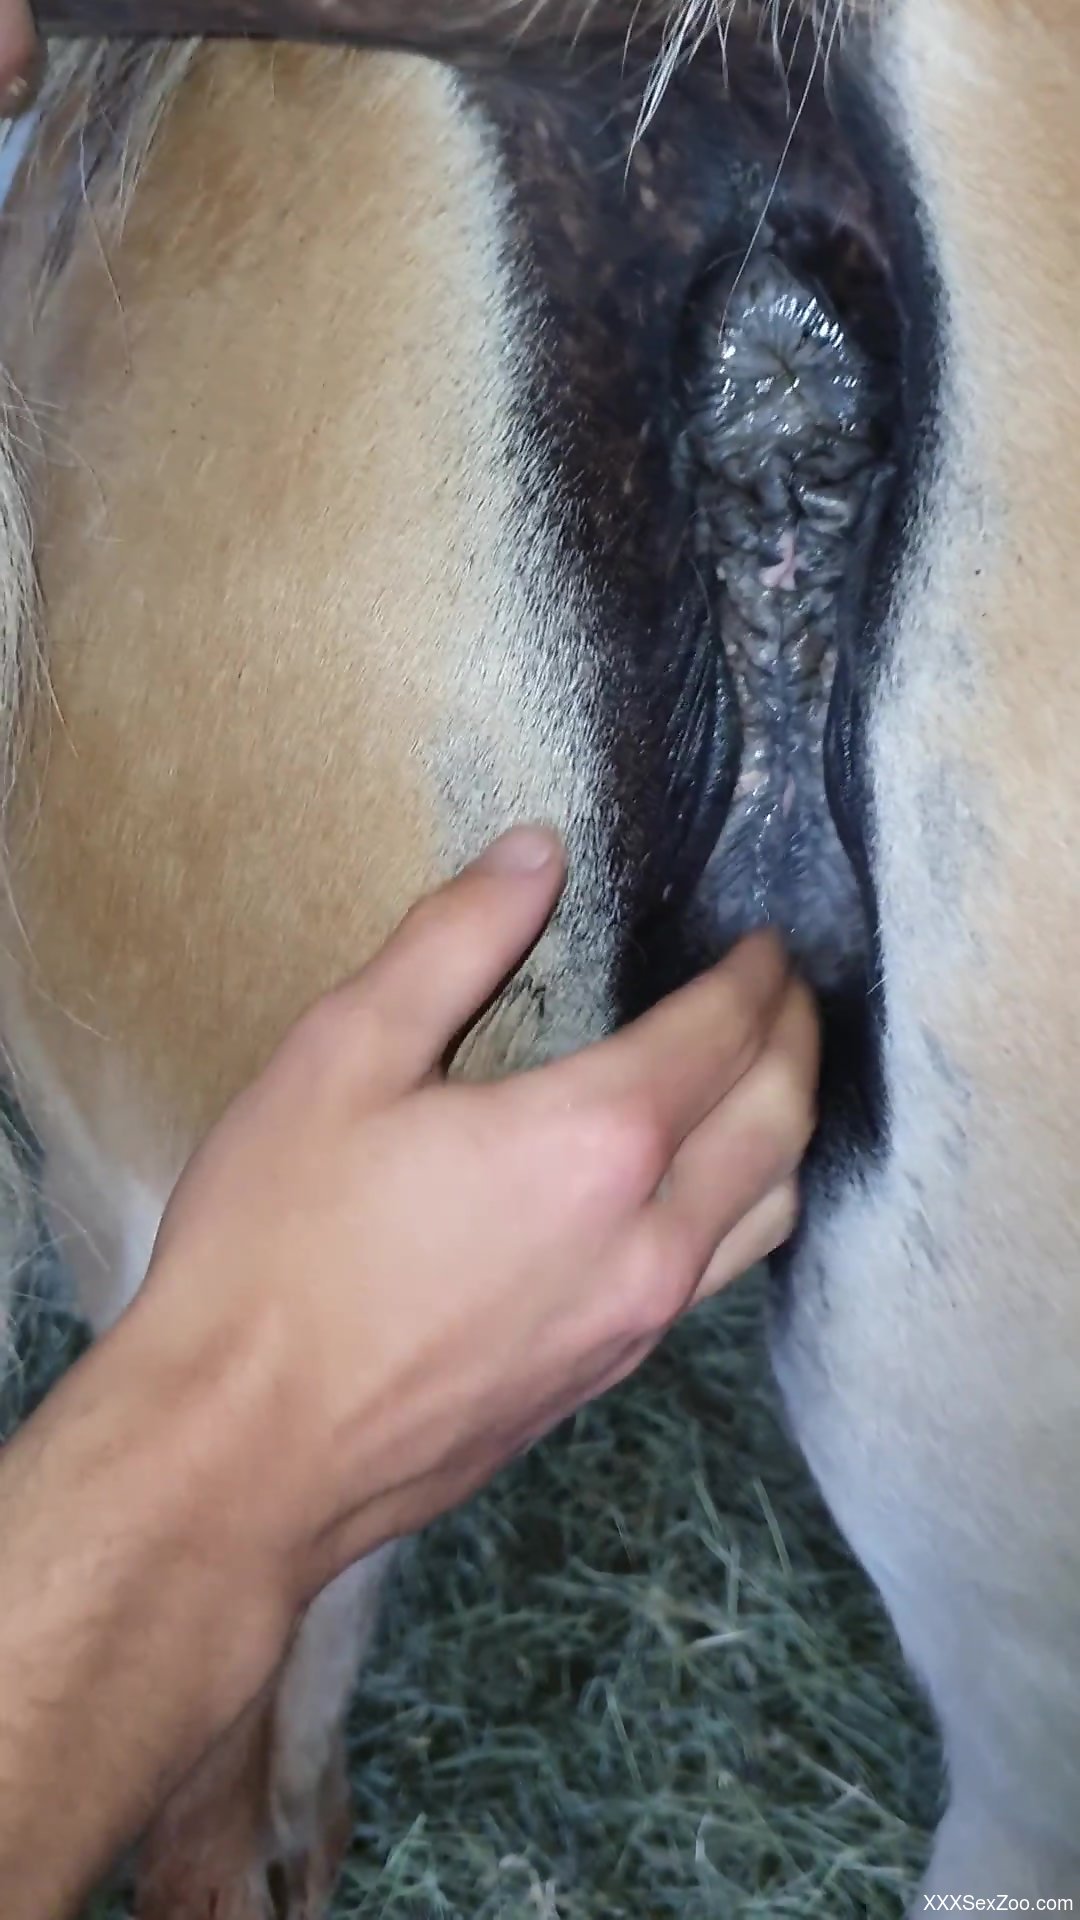 Xxx Video Boy And Horsh - Horny guy finger fucks his female horse in harsh modes - XXXSexZoo.com